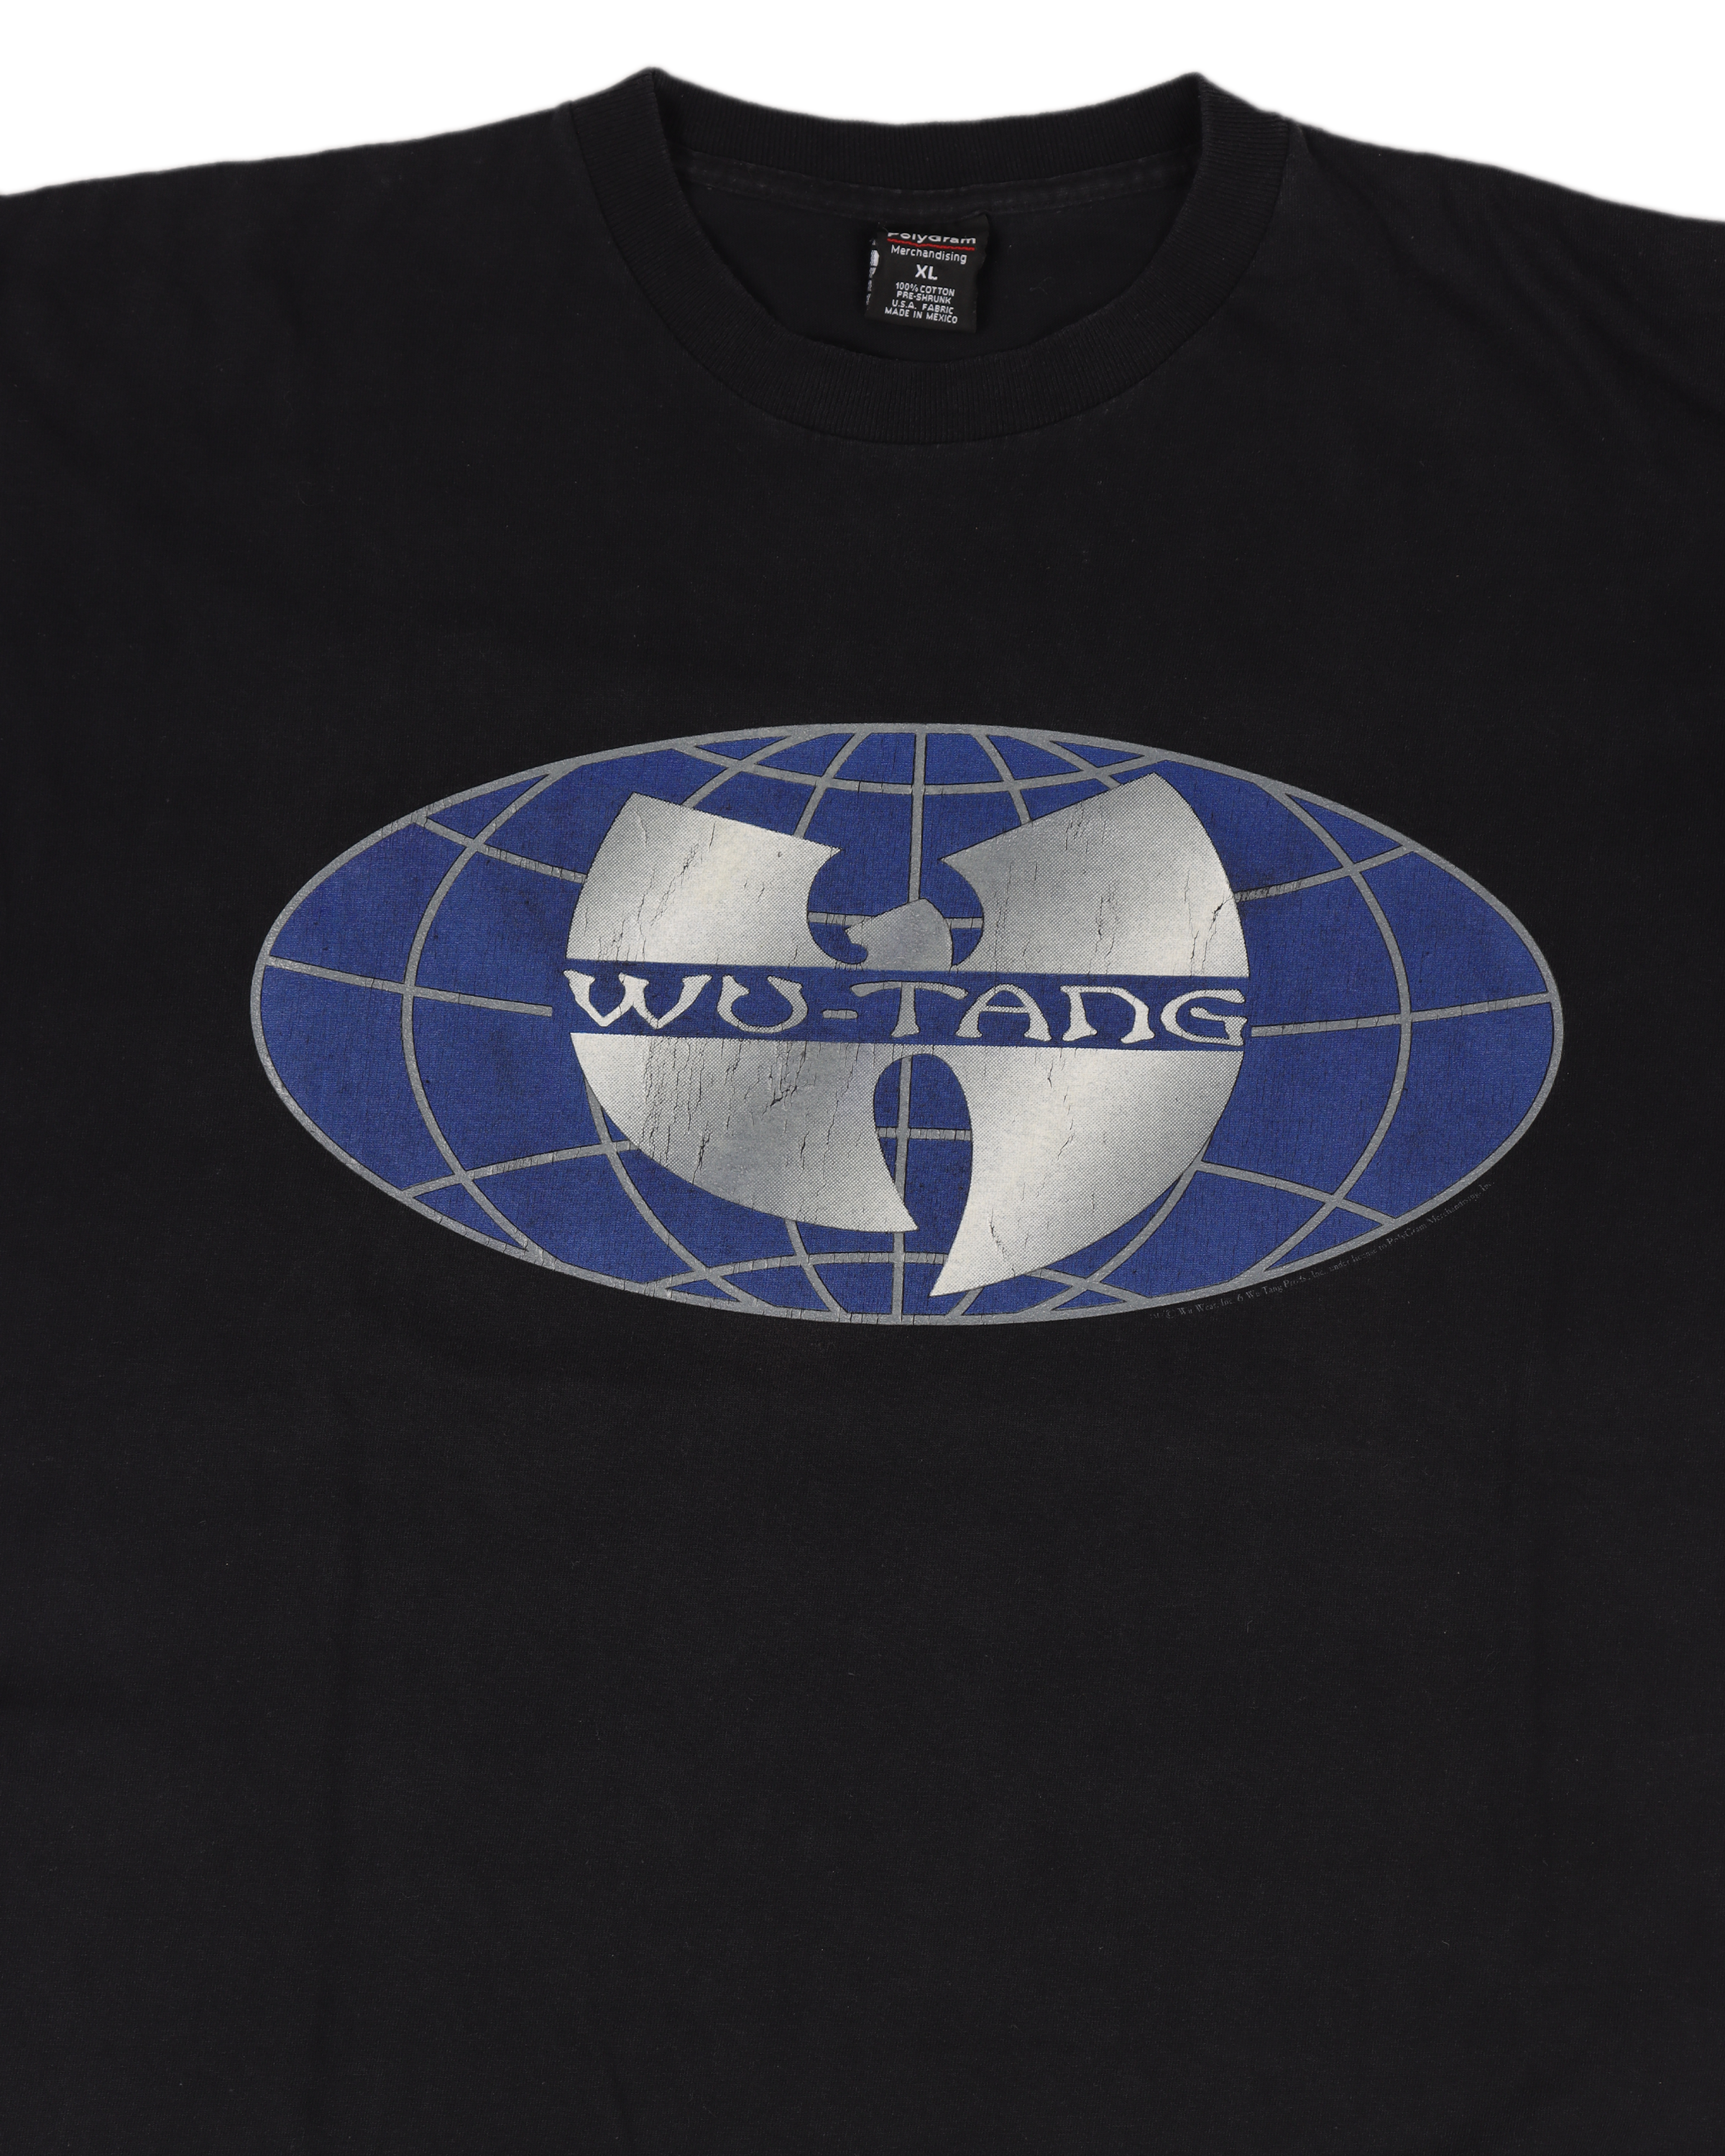 Wu-Tang Clan Logo Print T-Shirt